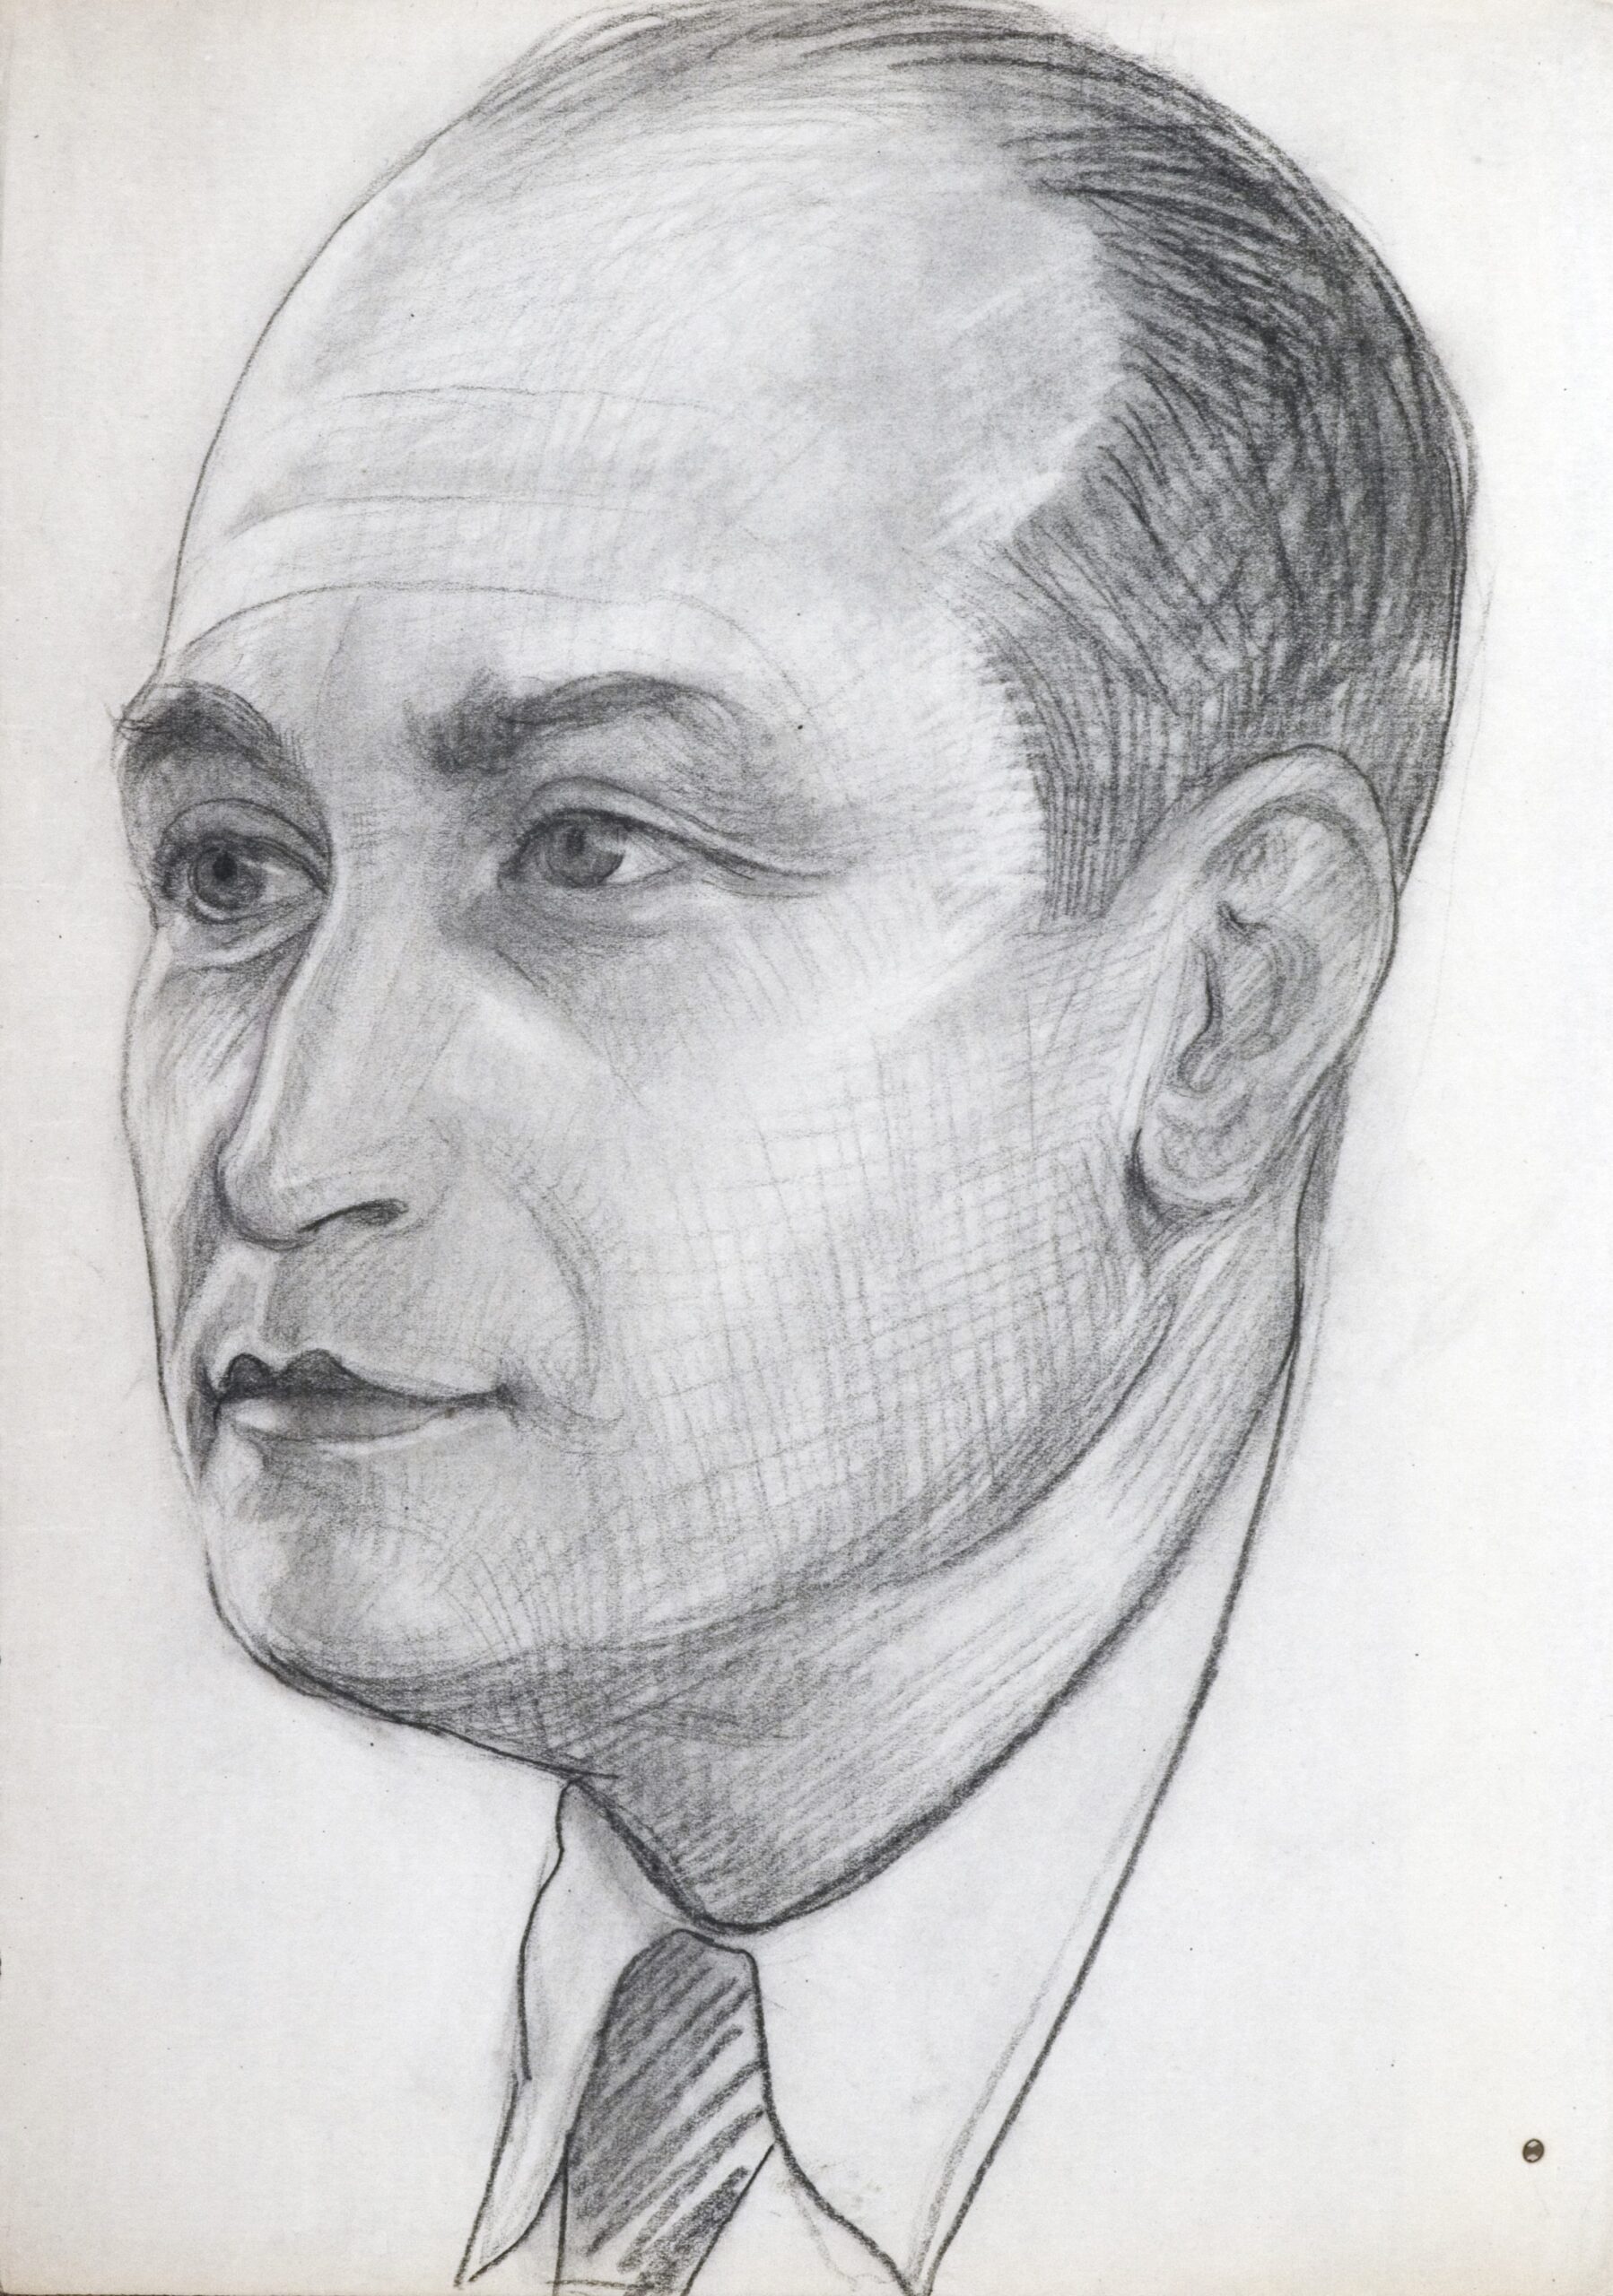 Dibujo de José Manaut titulado Retrato, con corbata, 1943. Carboncillo sobre papel.